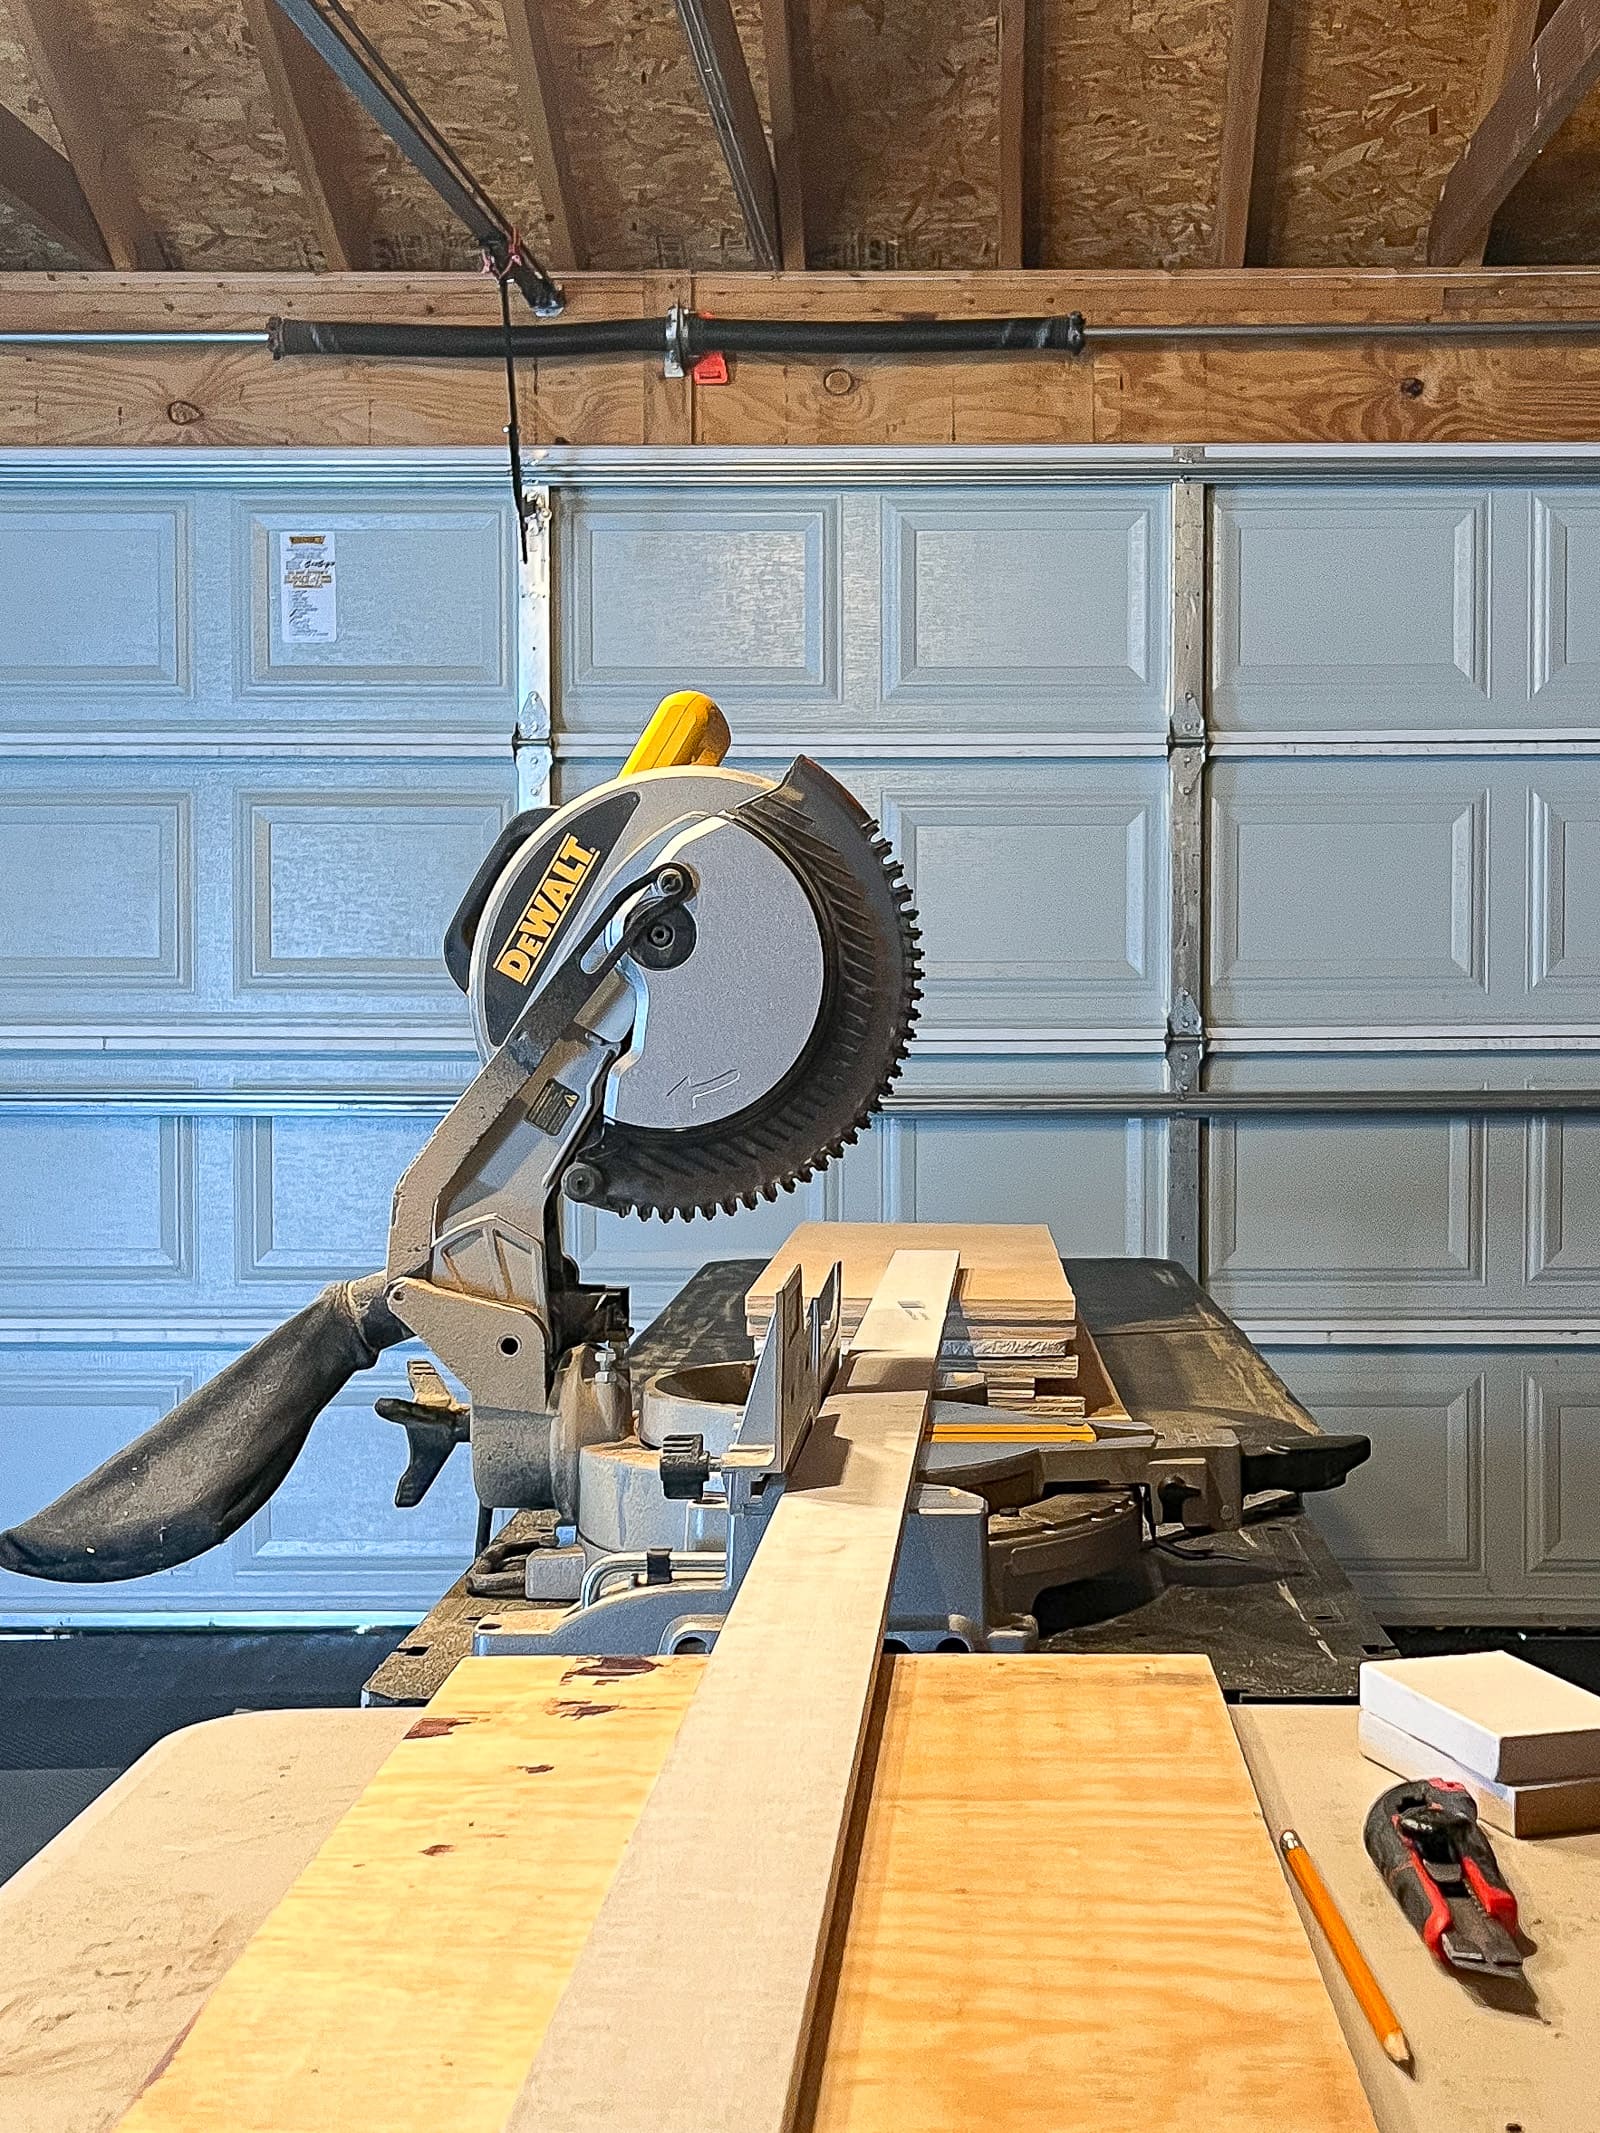 Using a miter saw to make cuts